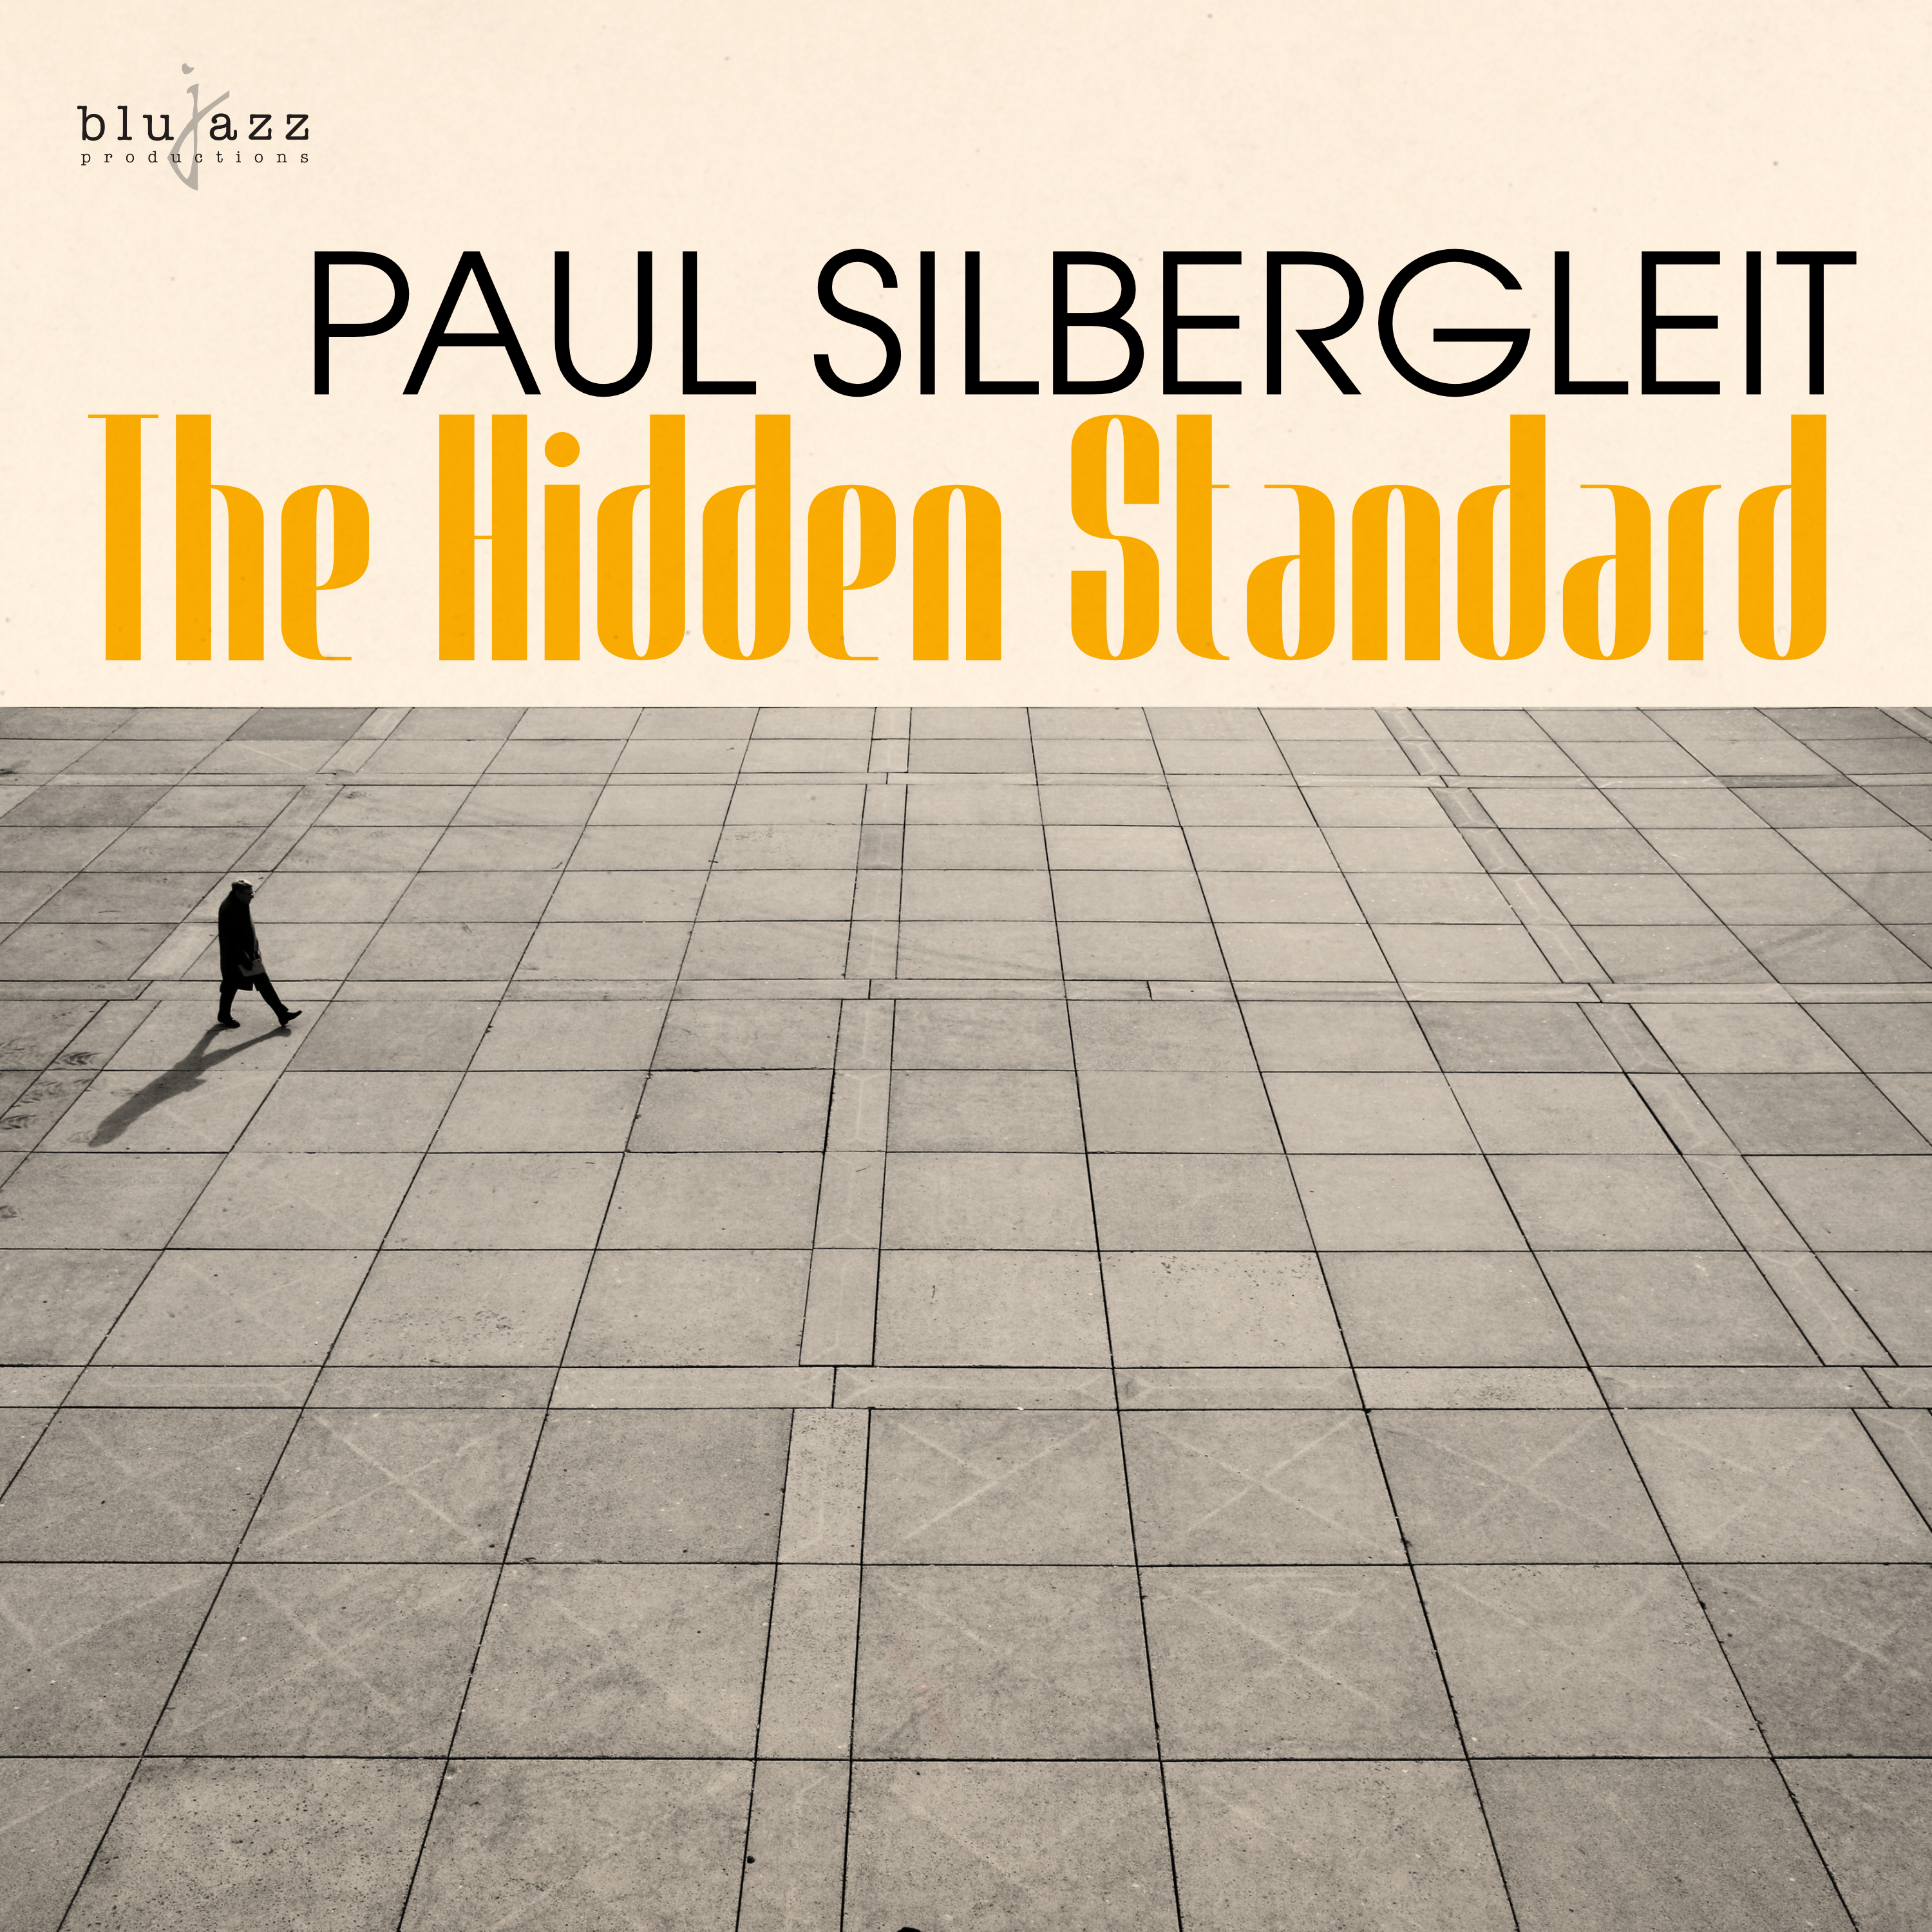 New Album: The Hidden Standard